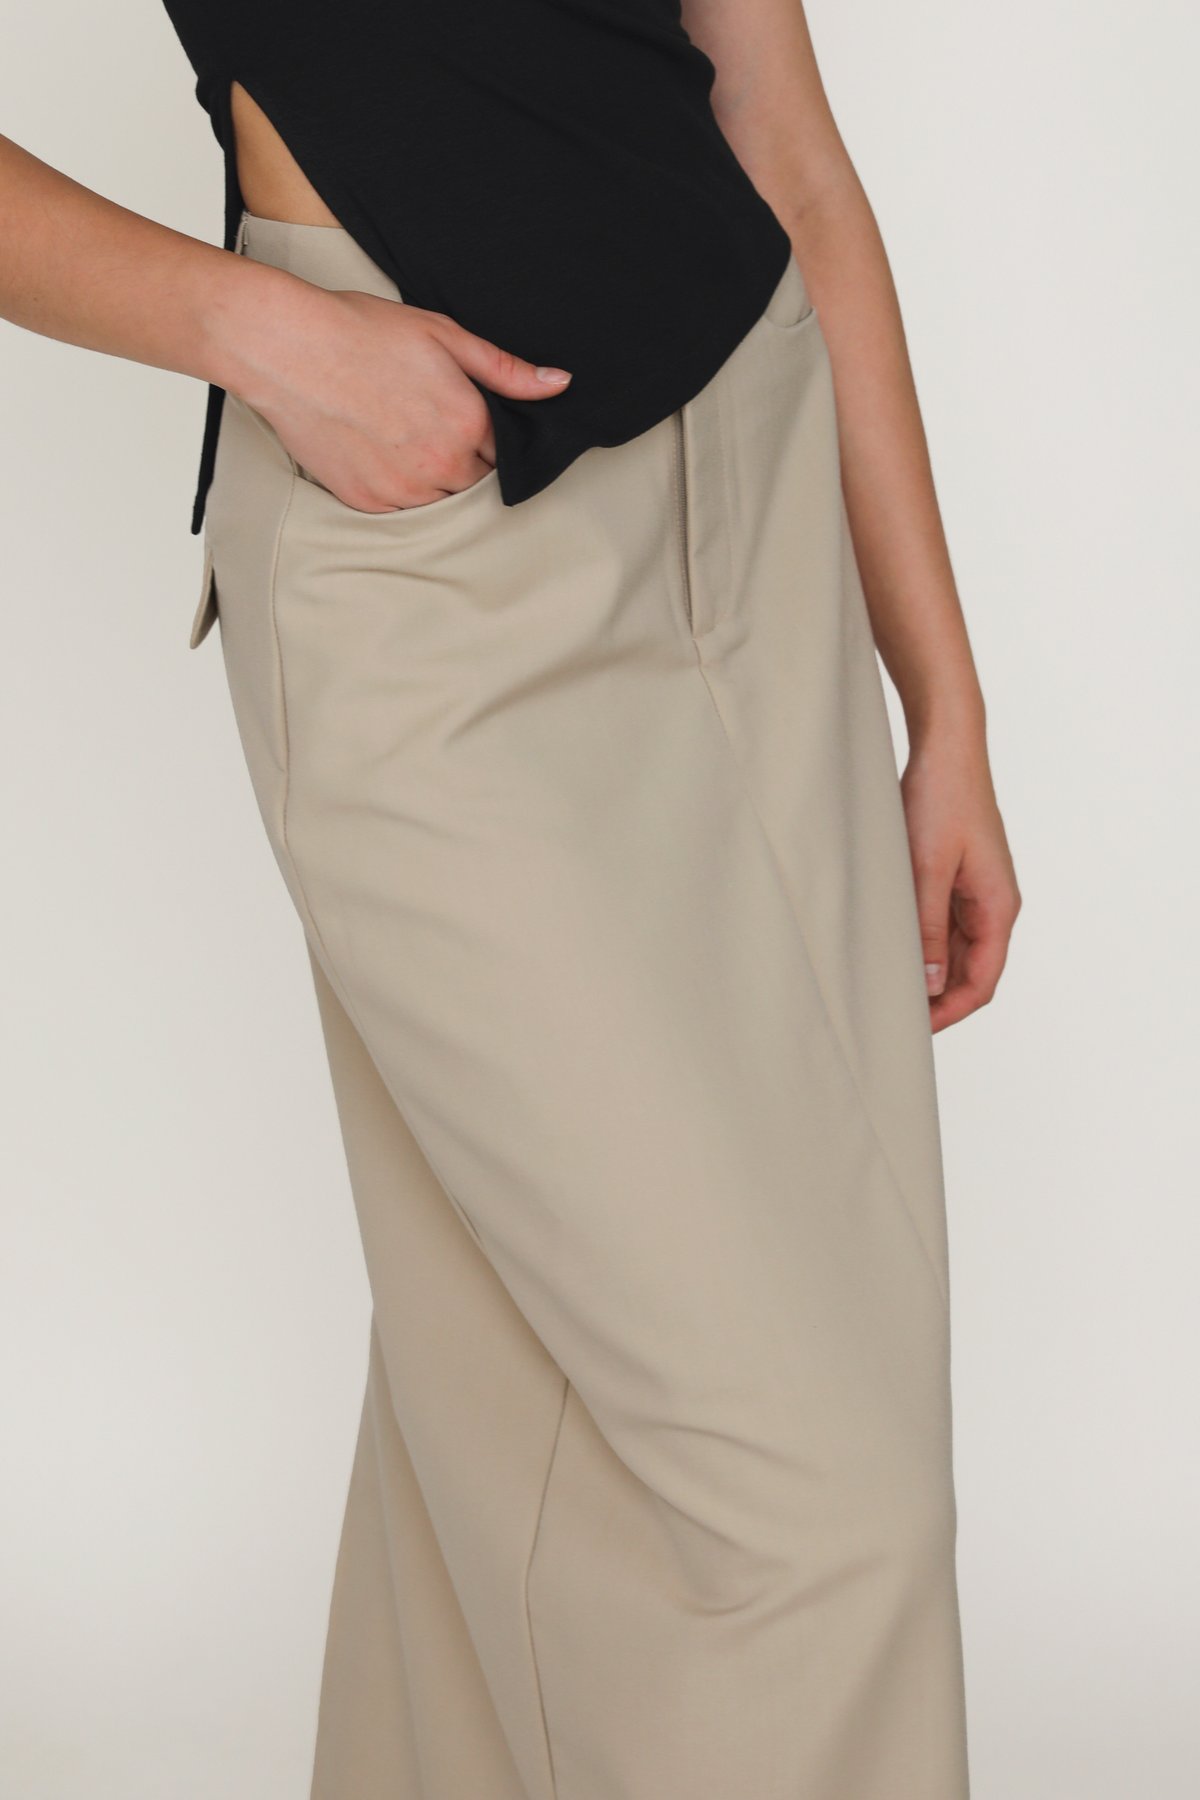 Flyn Tailored Maxi Skirt (Beige Sand)